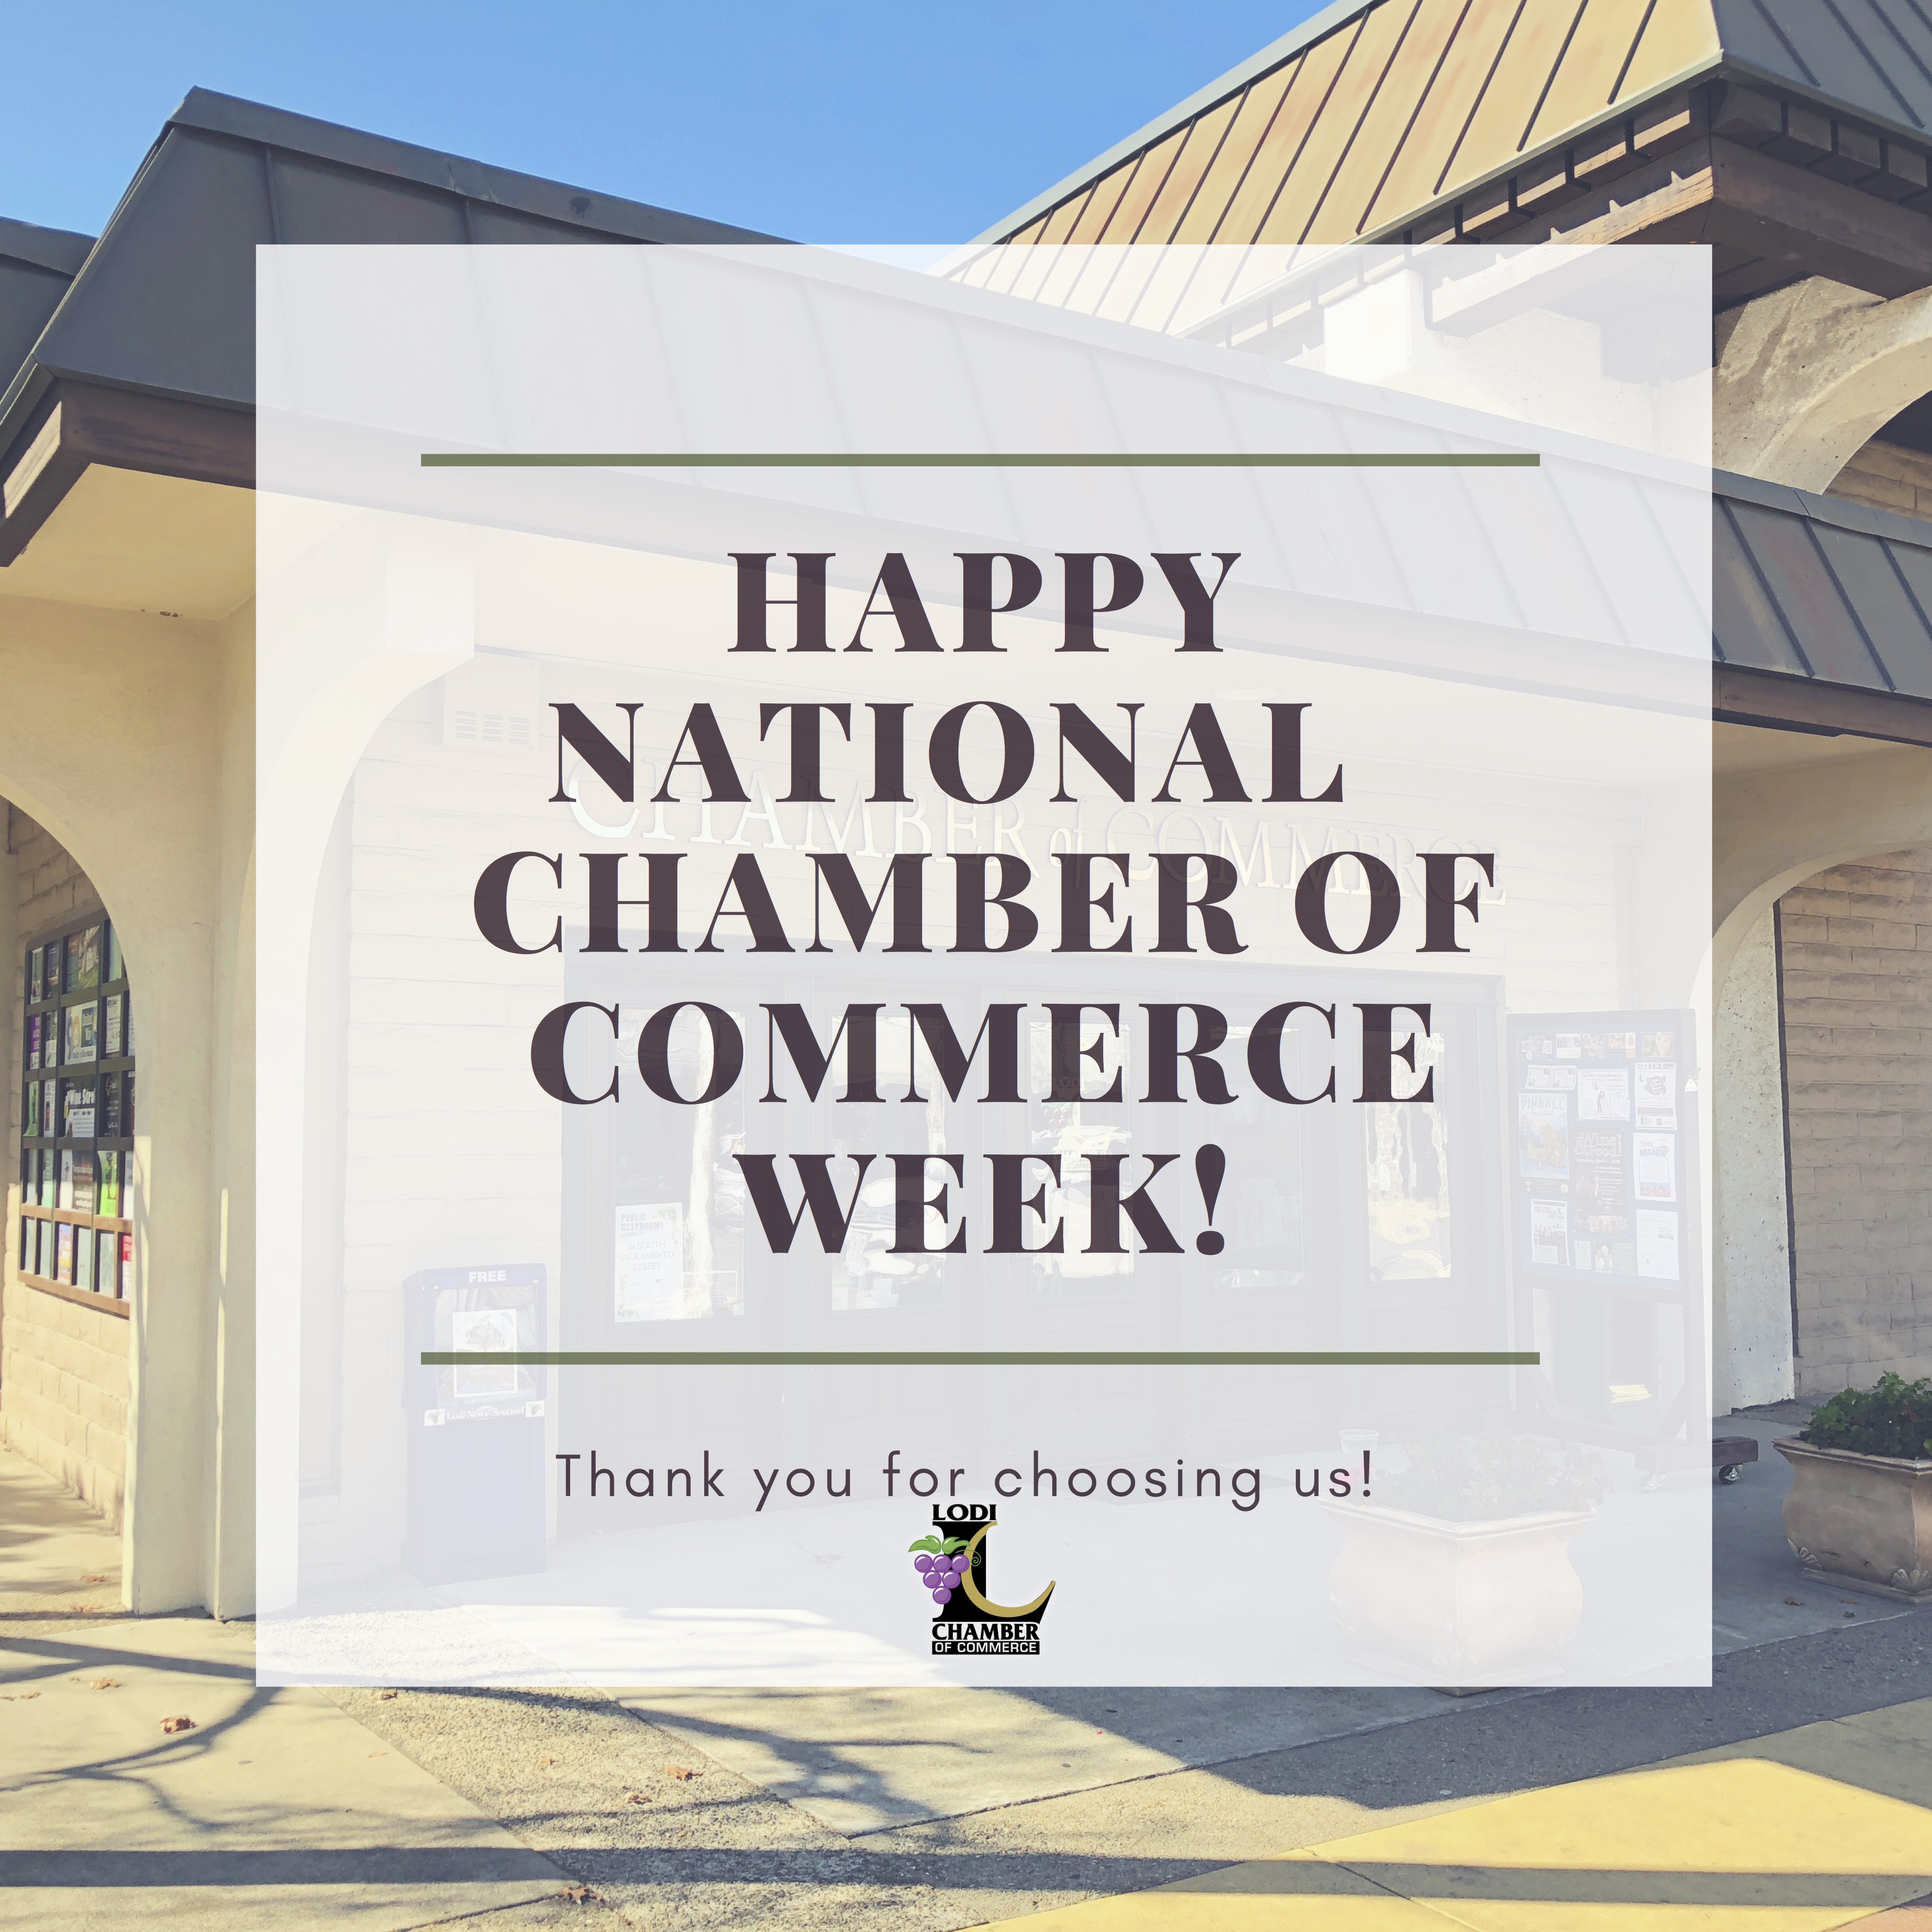 Image for Celebrating National Chamber of Commerce Week